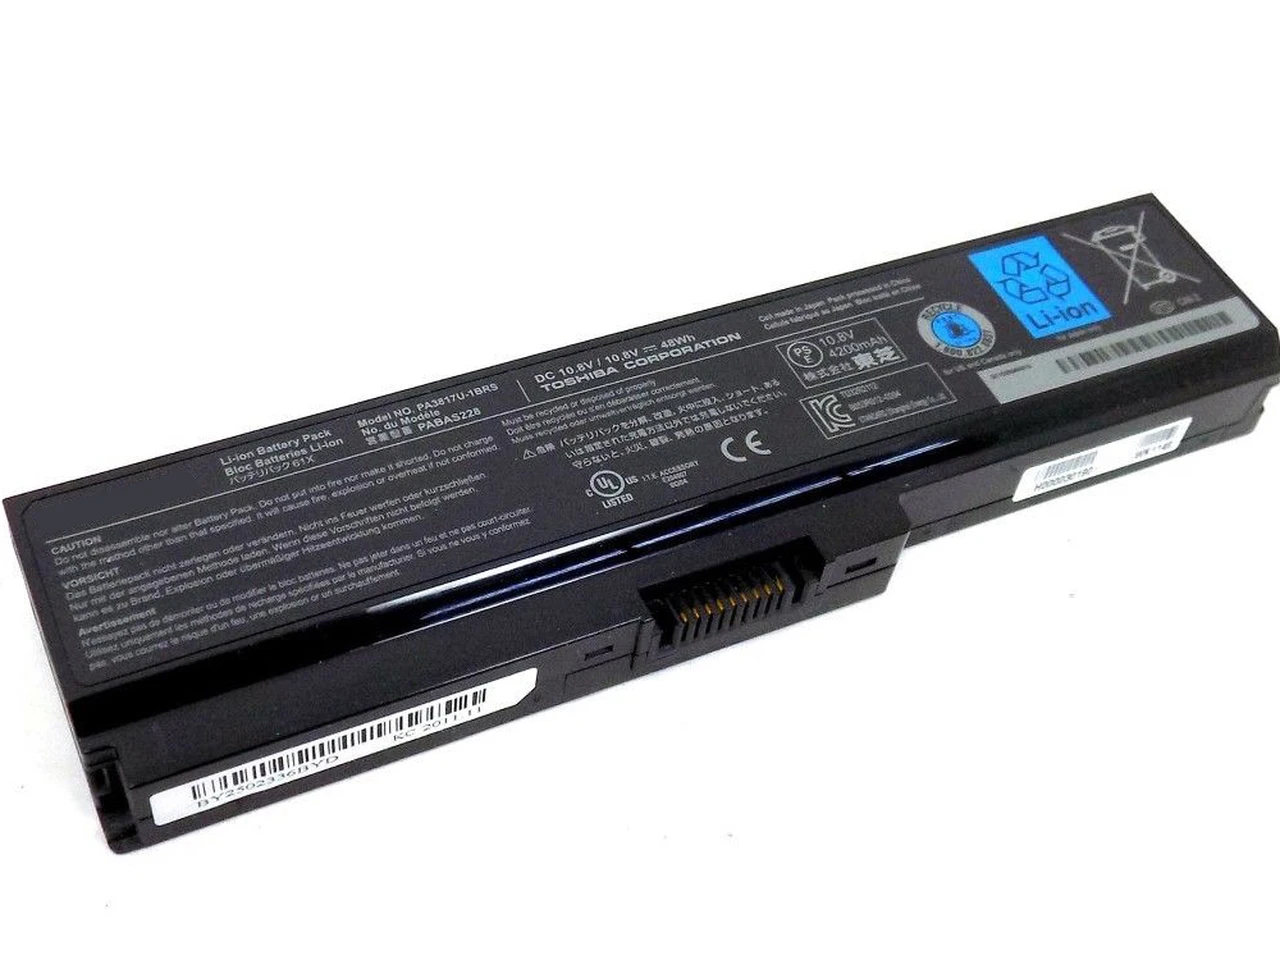 

Original PA3817U Laptop Battery For TOSHIBA L630 L650 L645 L655 L600 L700 L730 L735 L740 L745 L750 L755 PA3817U-1BRS PABAS228